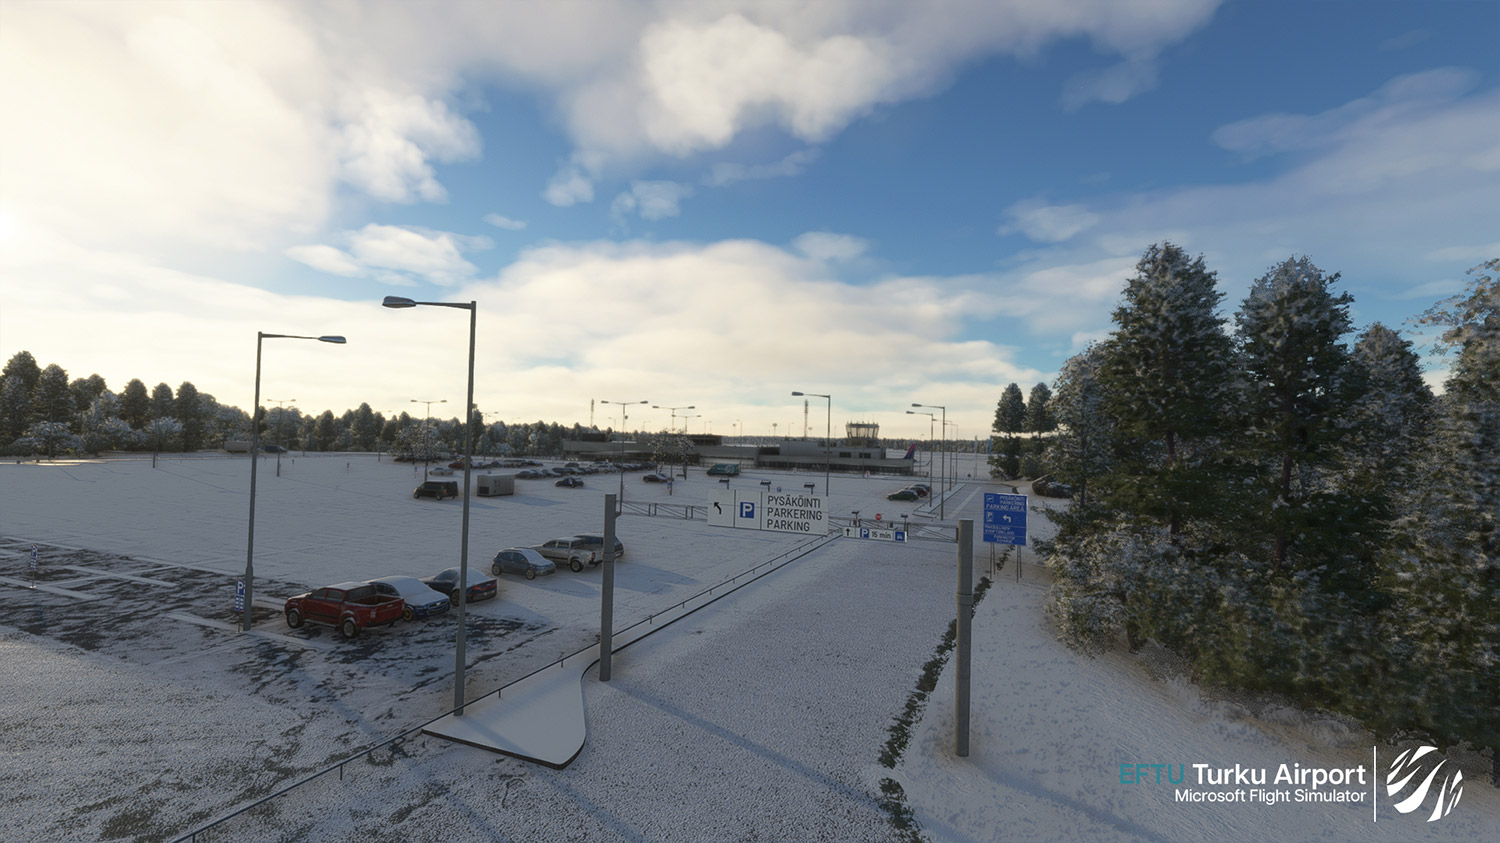 M'M Simulations - EFTU - Turku Airport